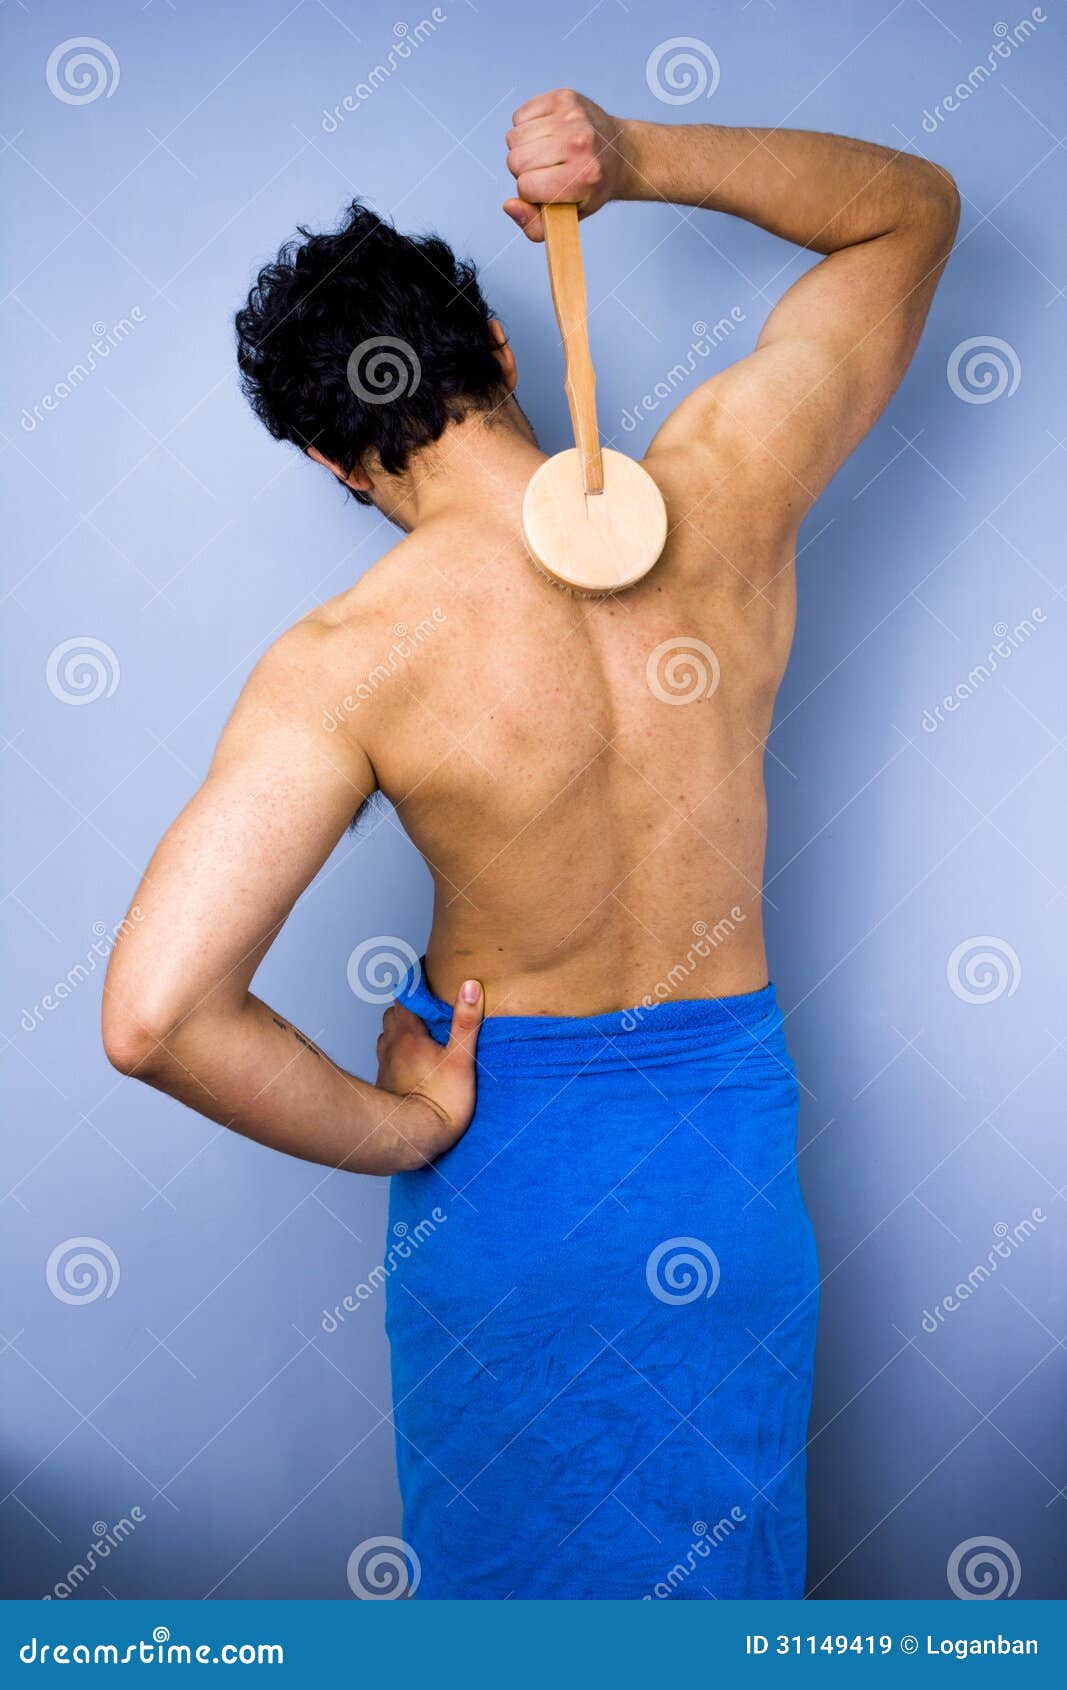 man in towel scrubbing his back